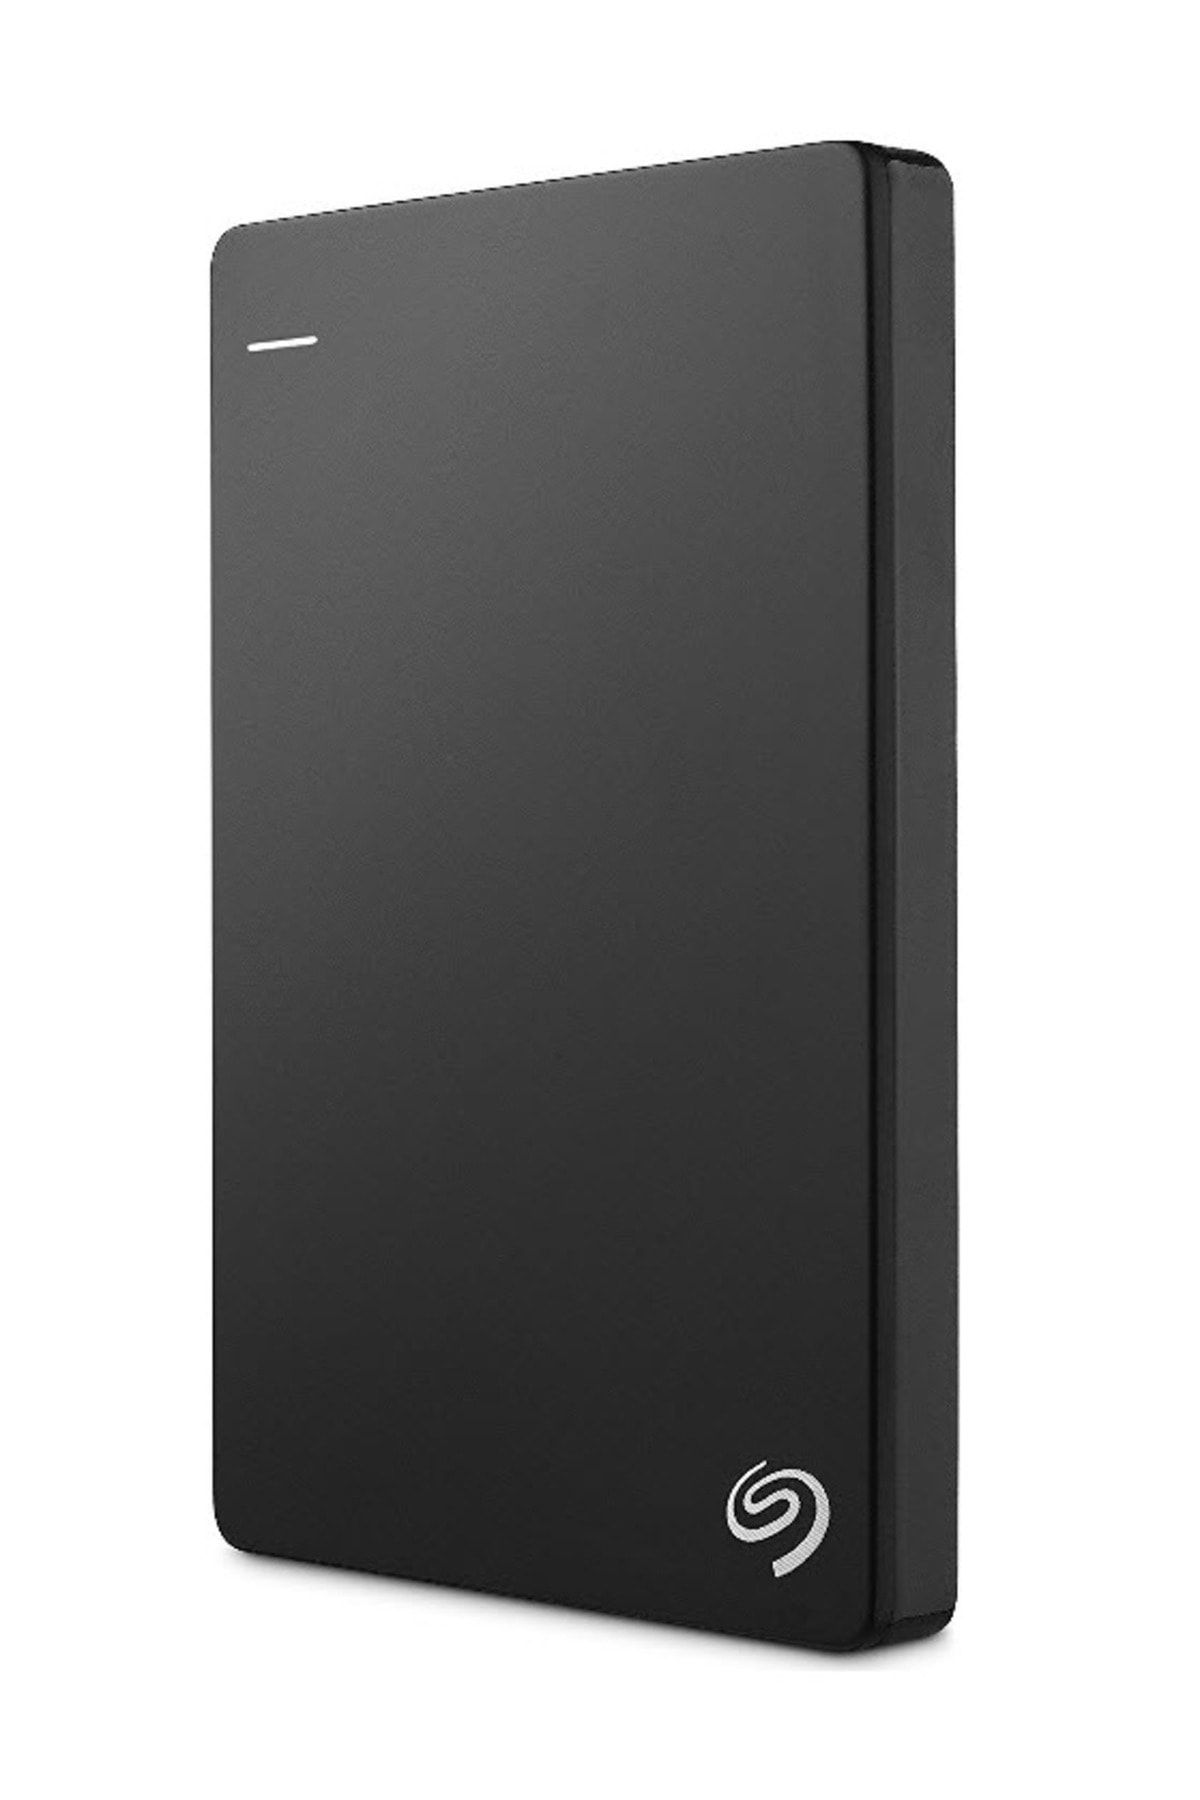 Seagate Backup Plus 2TB 2.5" USB 3.0 Taşınabilir Disk - Siyah (STDR2000200)